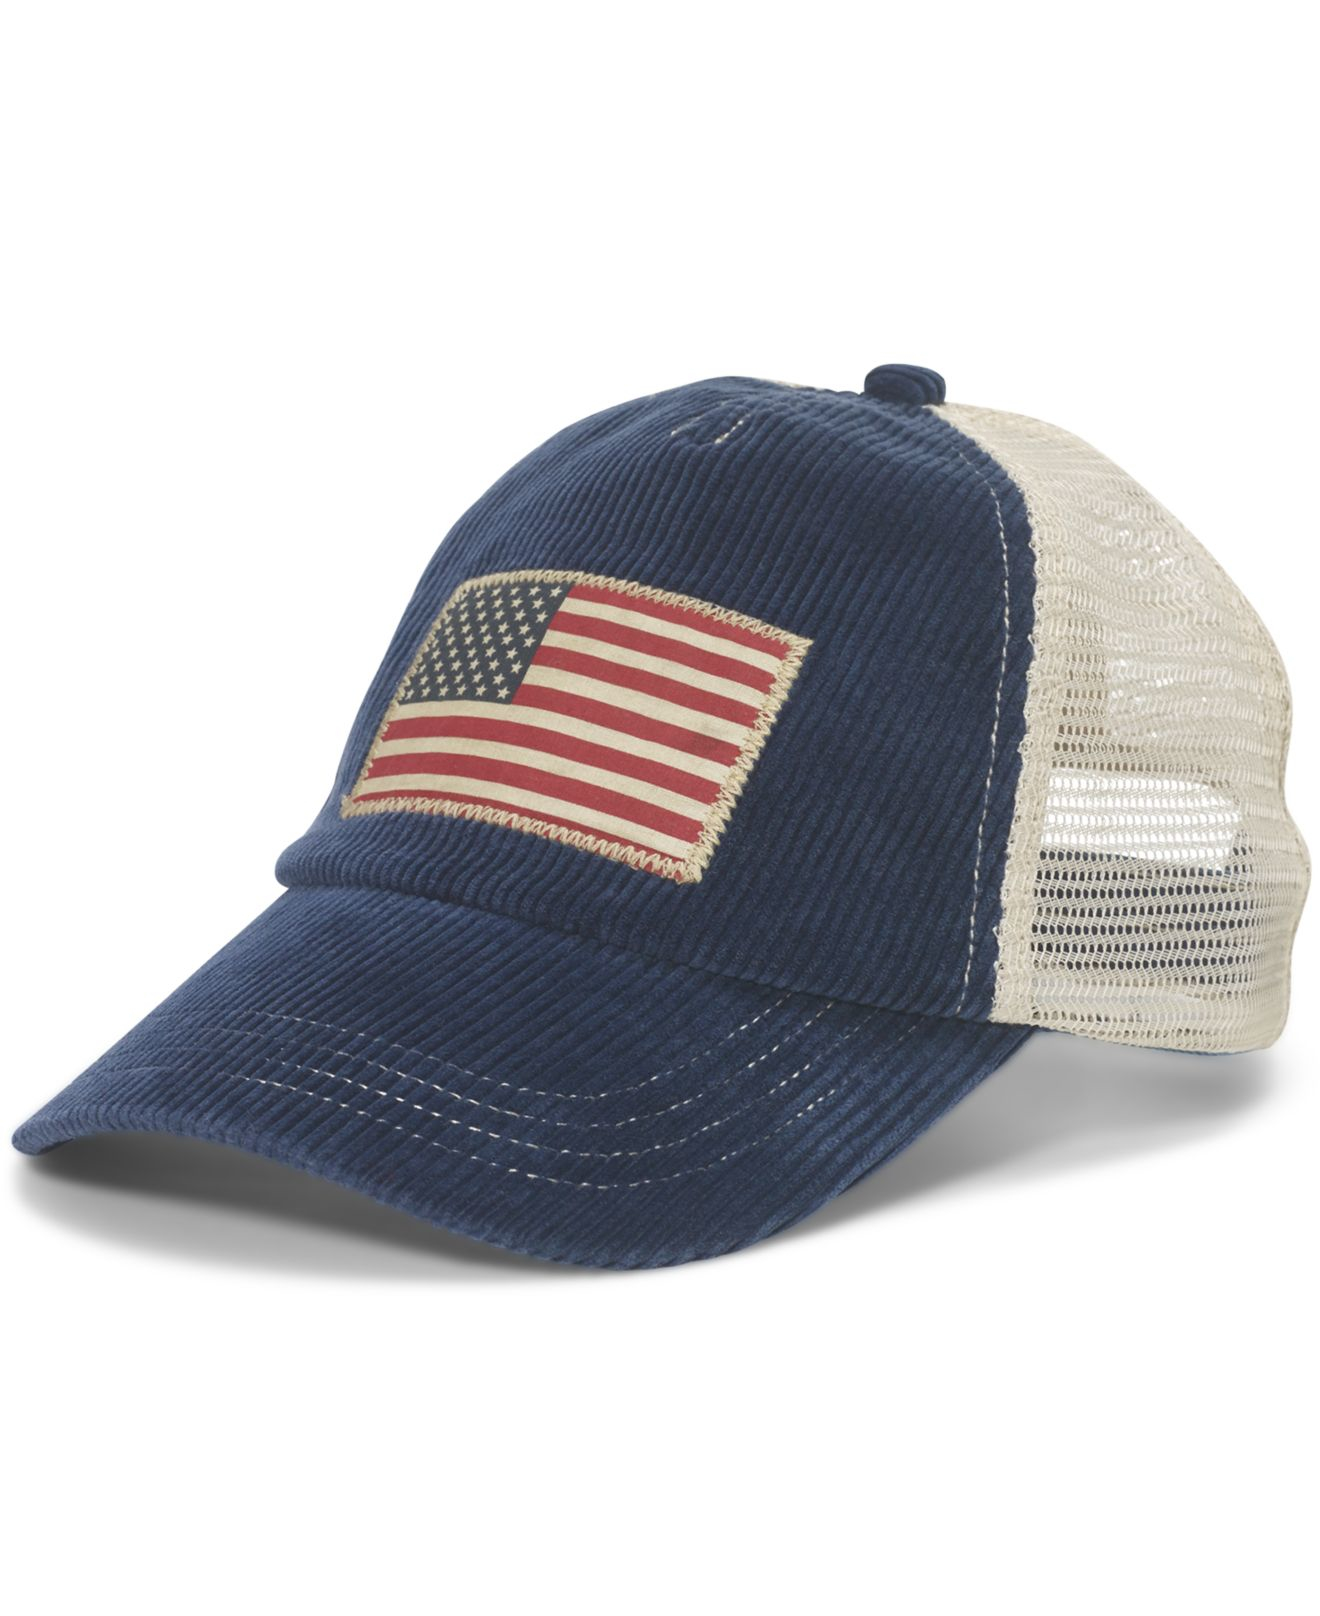 Lyst - Polo Ralph Lauren Corduroy Trucker Hat in Blue for Men